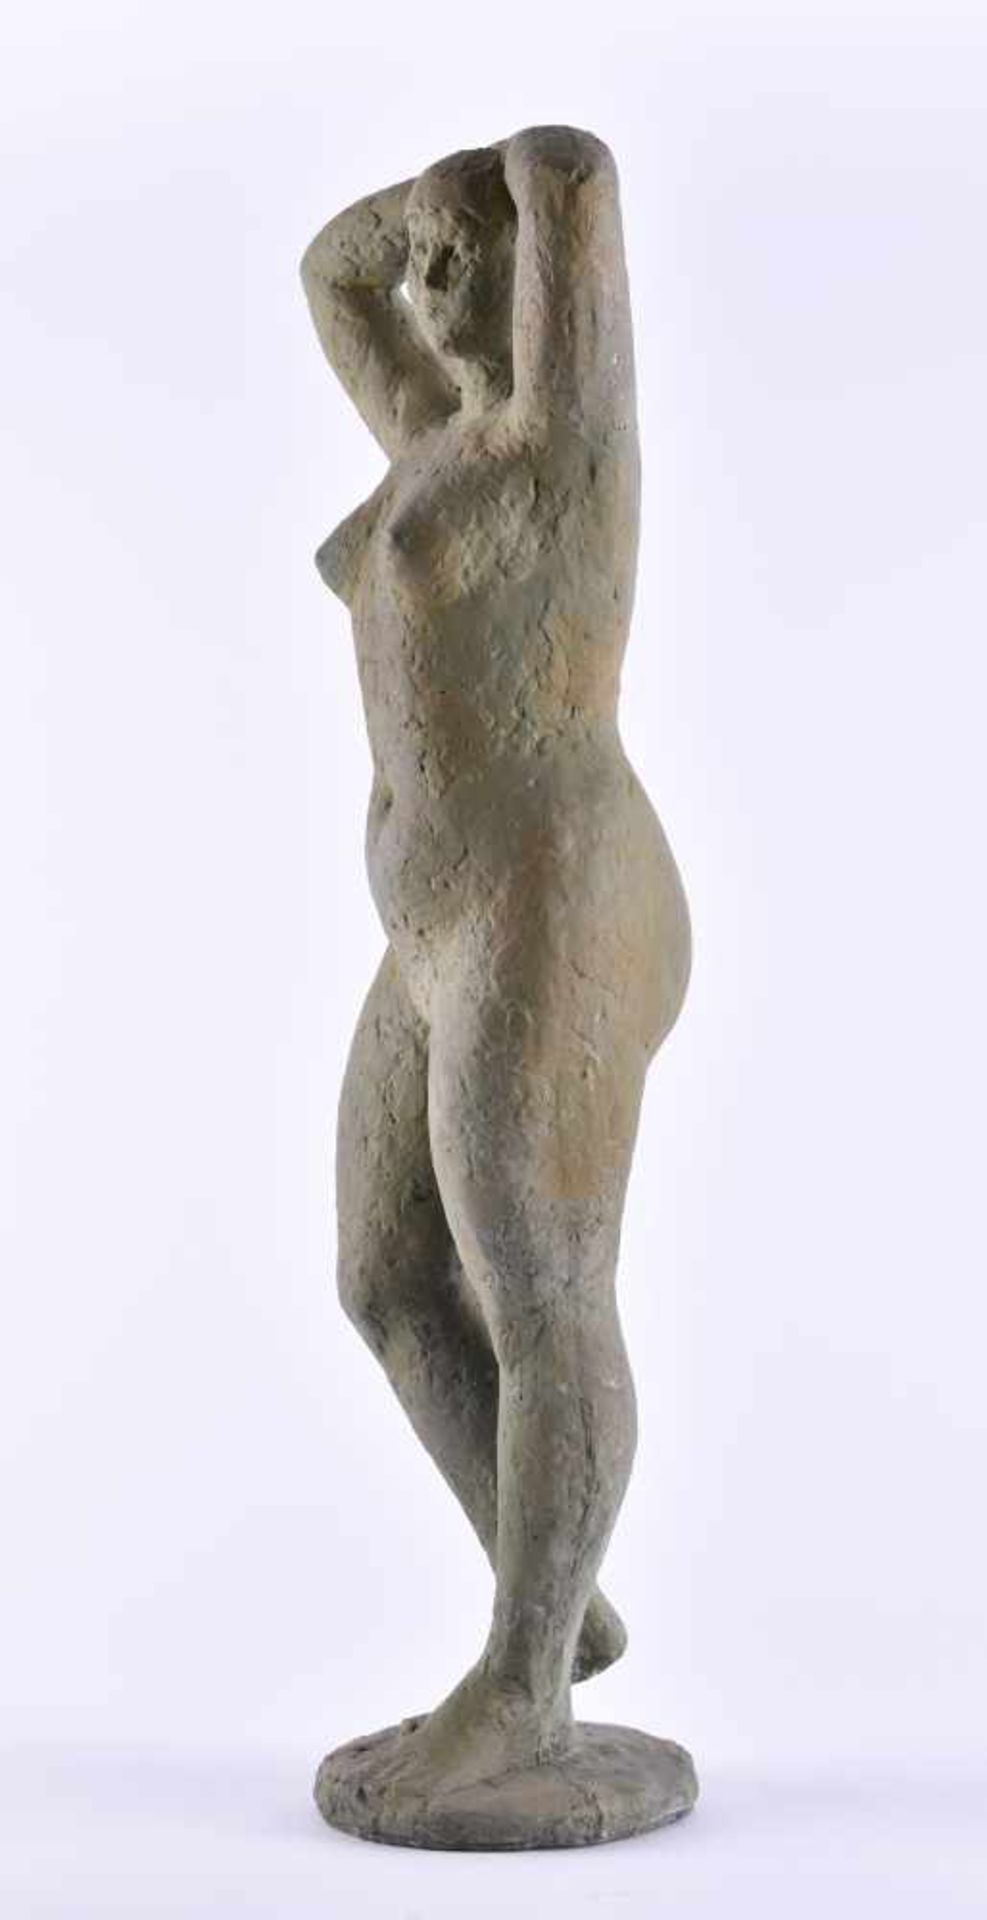 Rolf WINKLER (1930-2001)"Stehende"sculpture - stone casting, height: 60 cm,monogrammed on the - Image 2 of 5